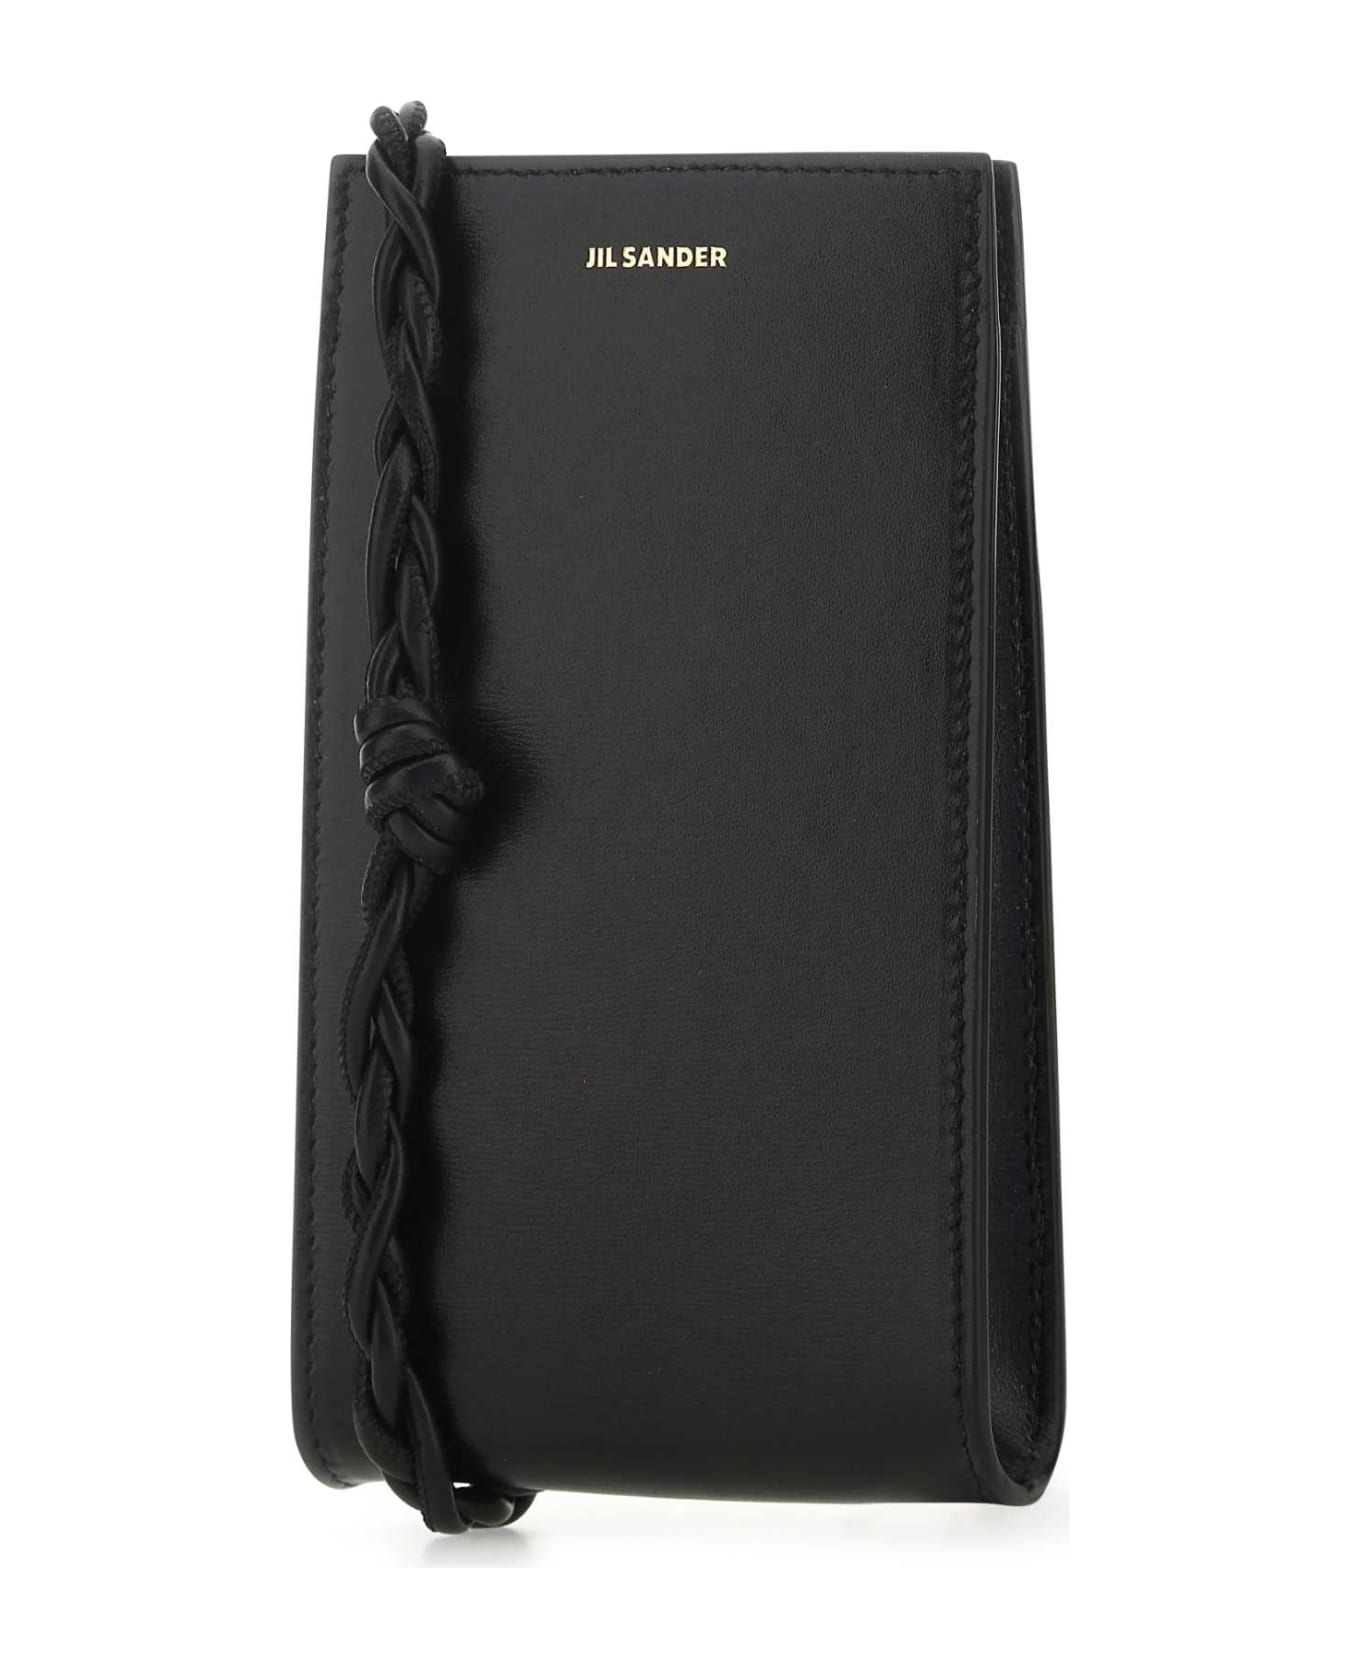 Jil Sander Black Leather Phone Case - 001 デジタルアクセサリー